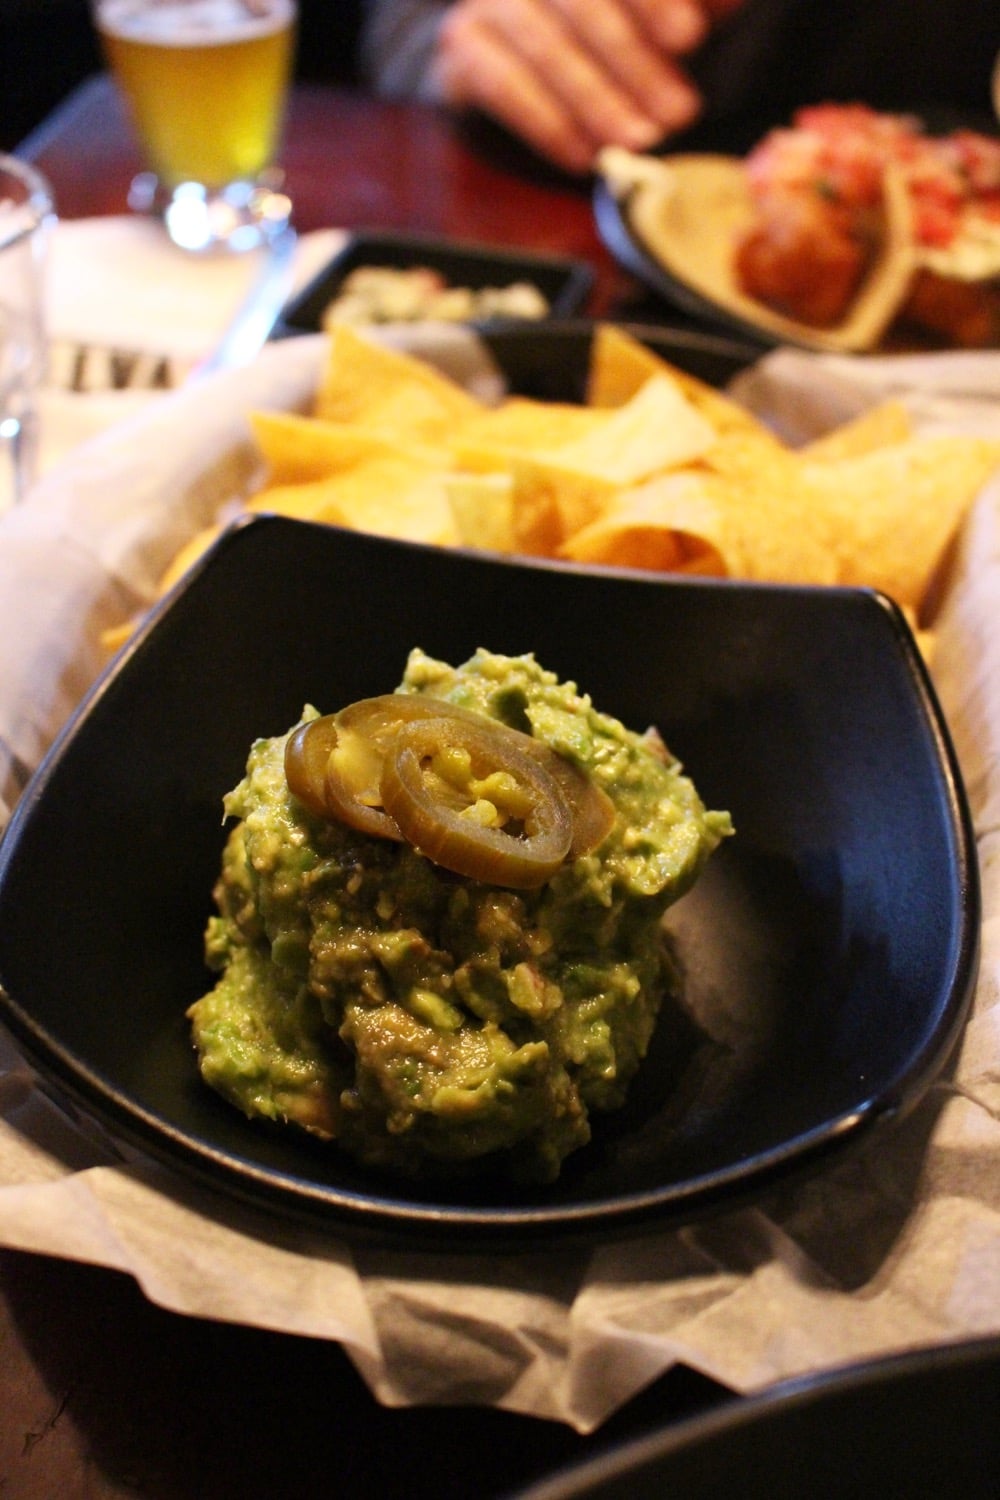 a guacamole appetizer on a plate